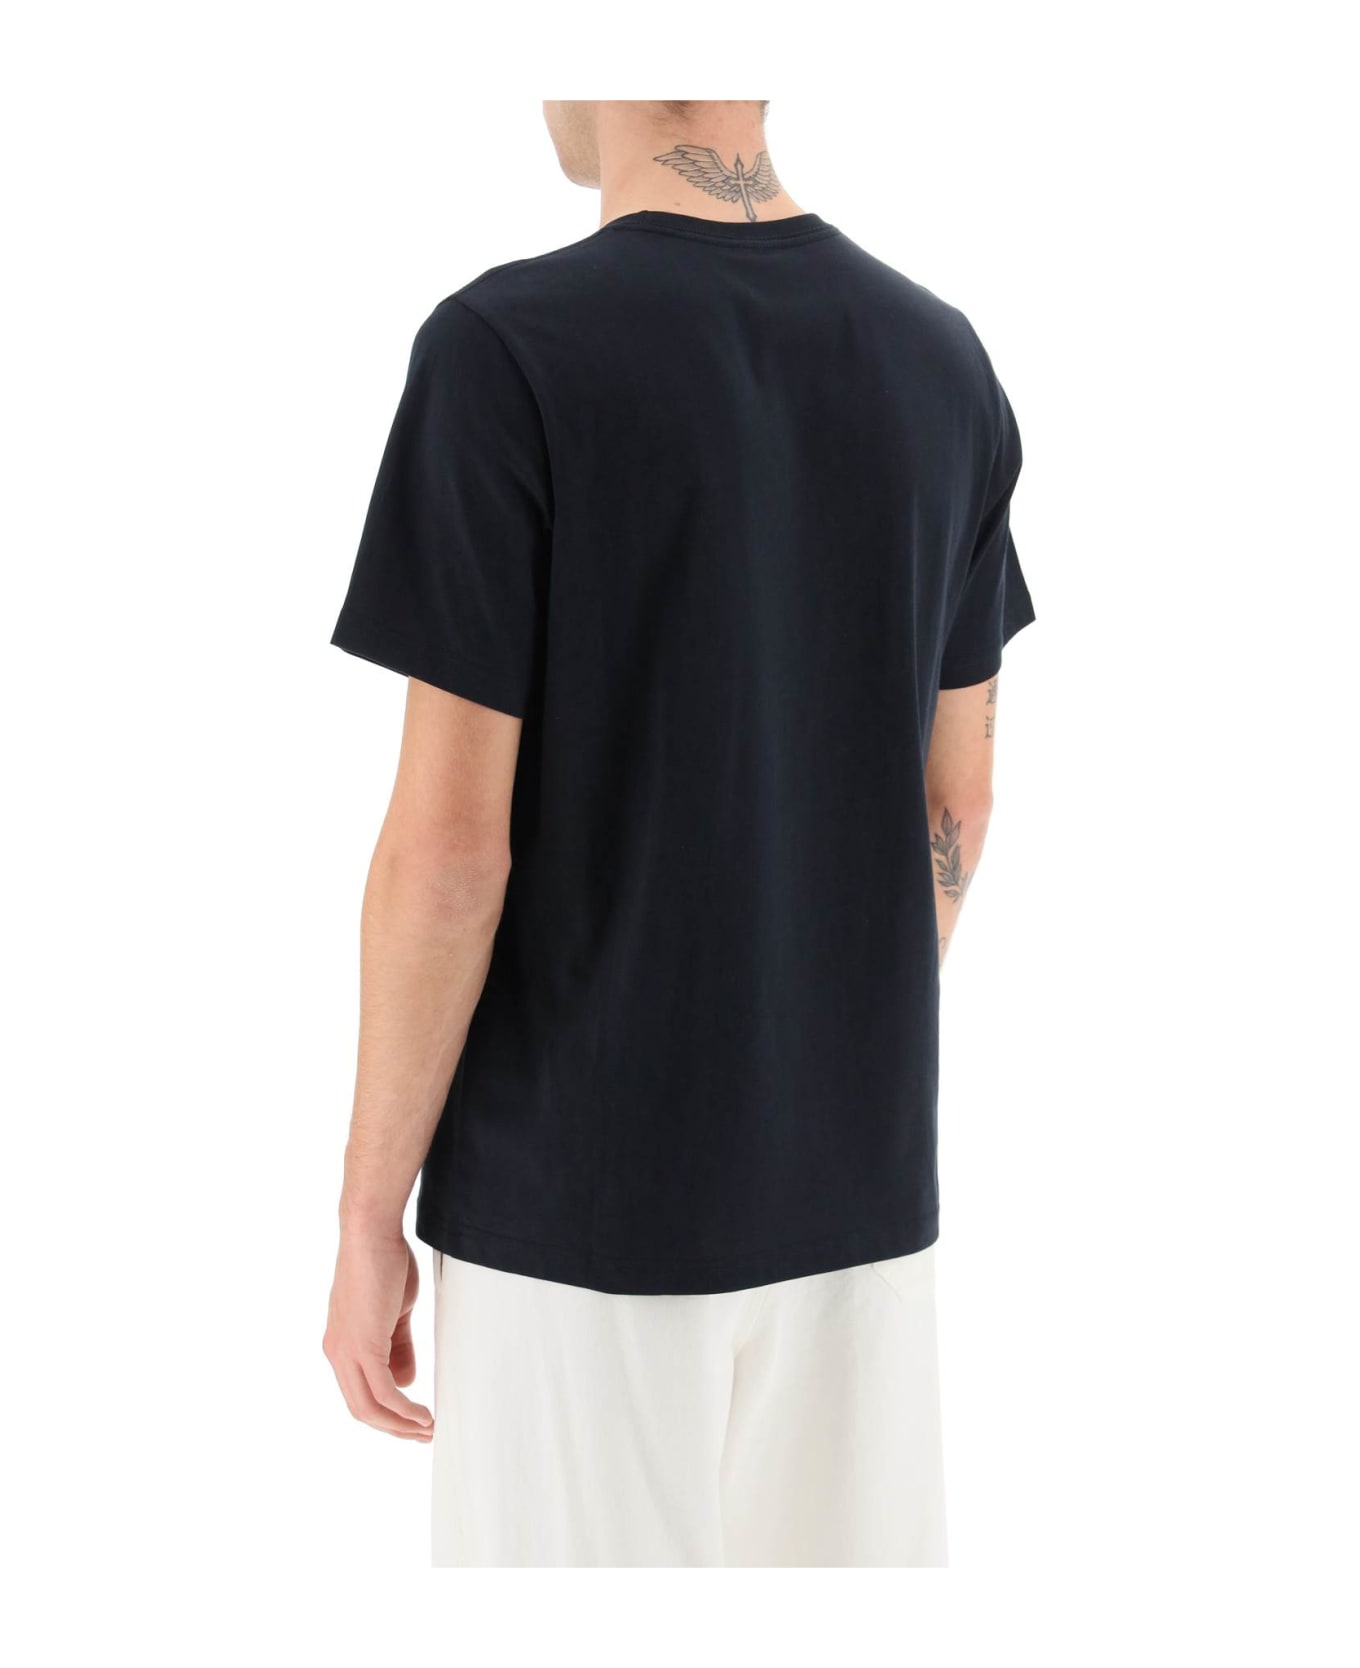 Paul Smith T-shirt - VERY DARK NAVY (Blue) シャツ